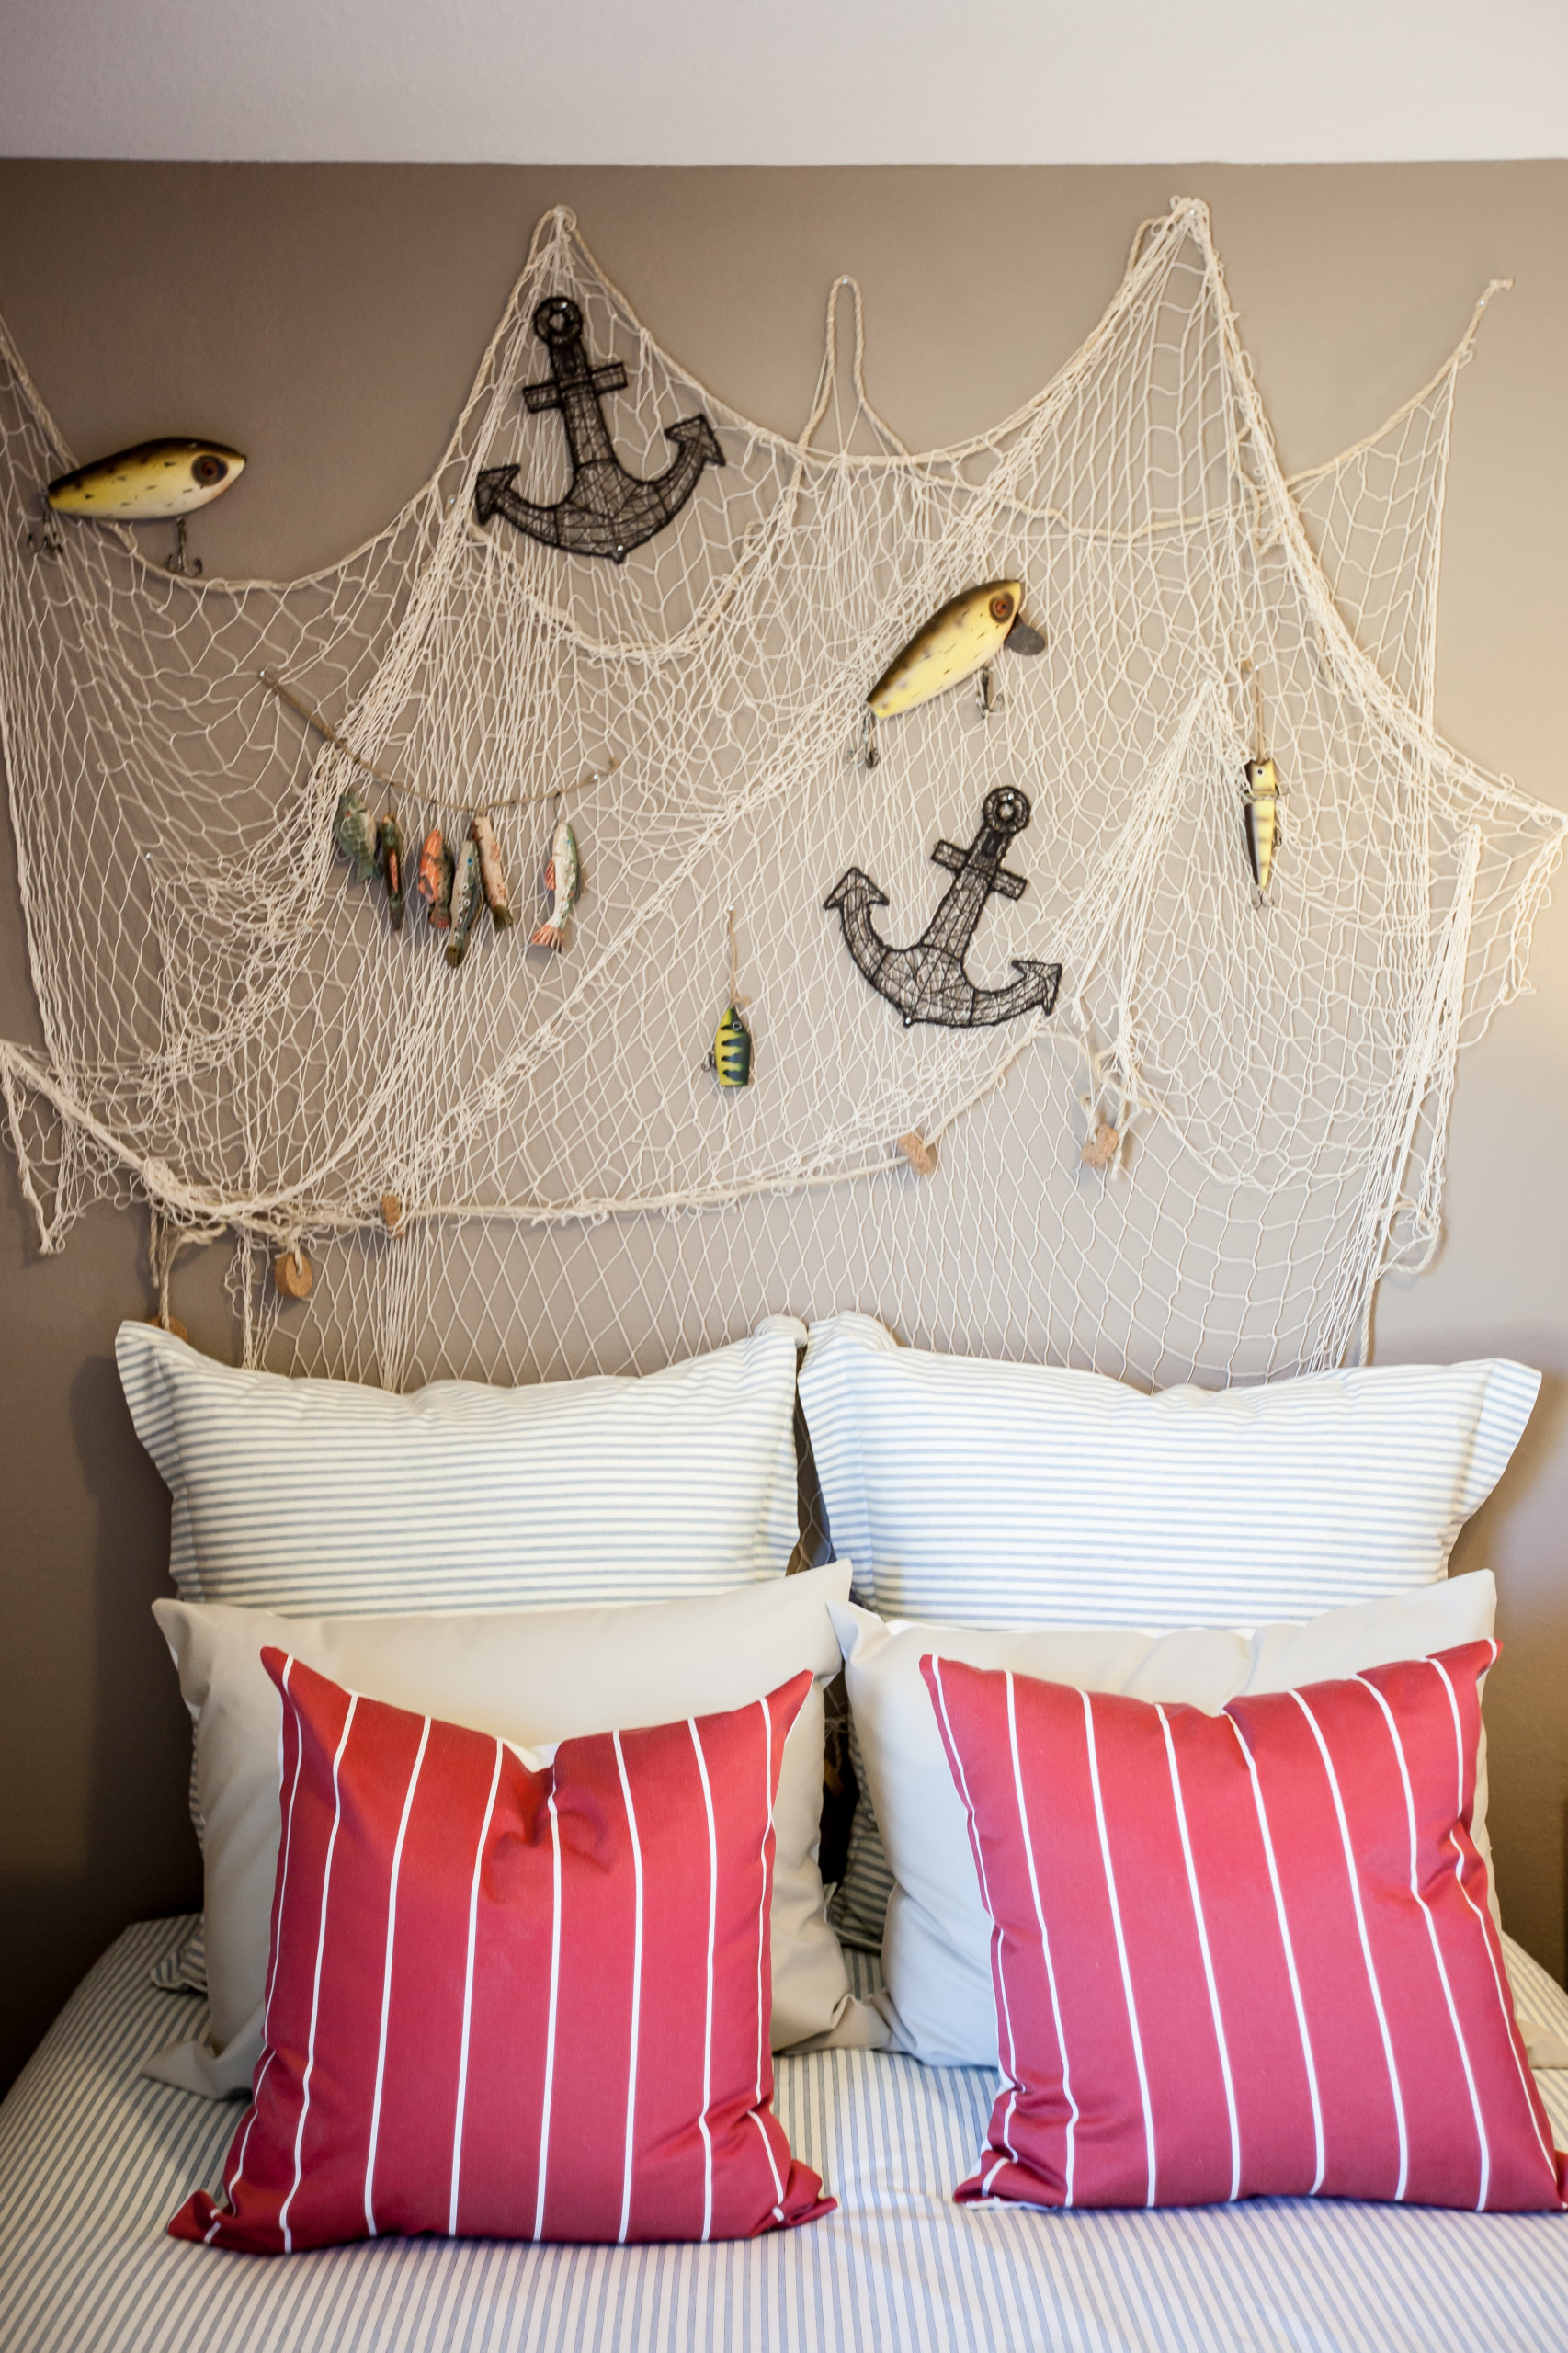 Fishing Themed Bedroom - Photos & Ideas